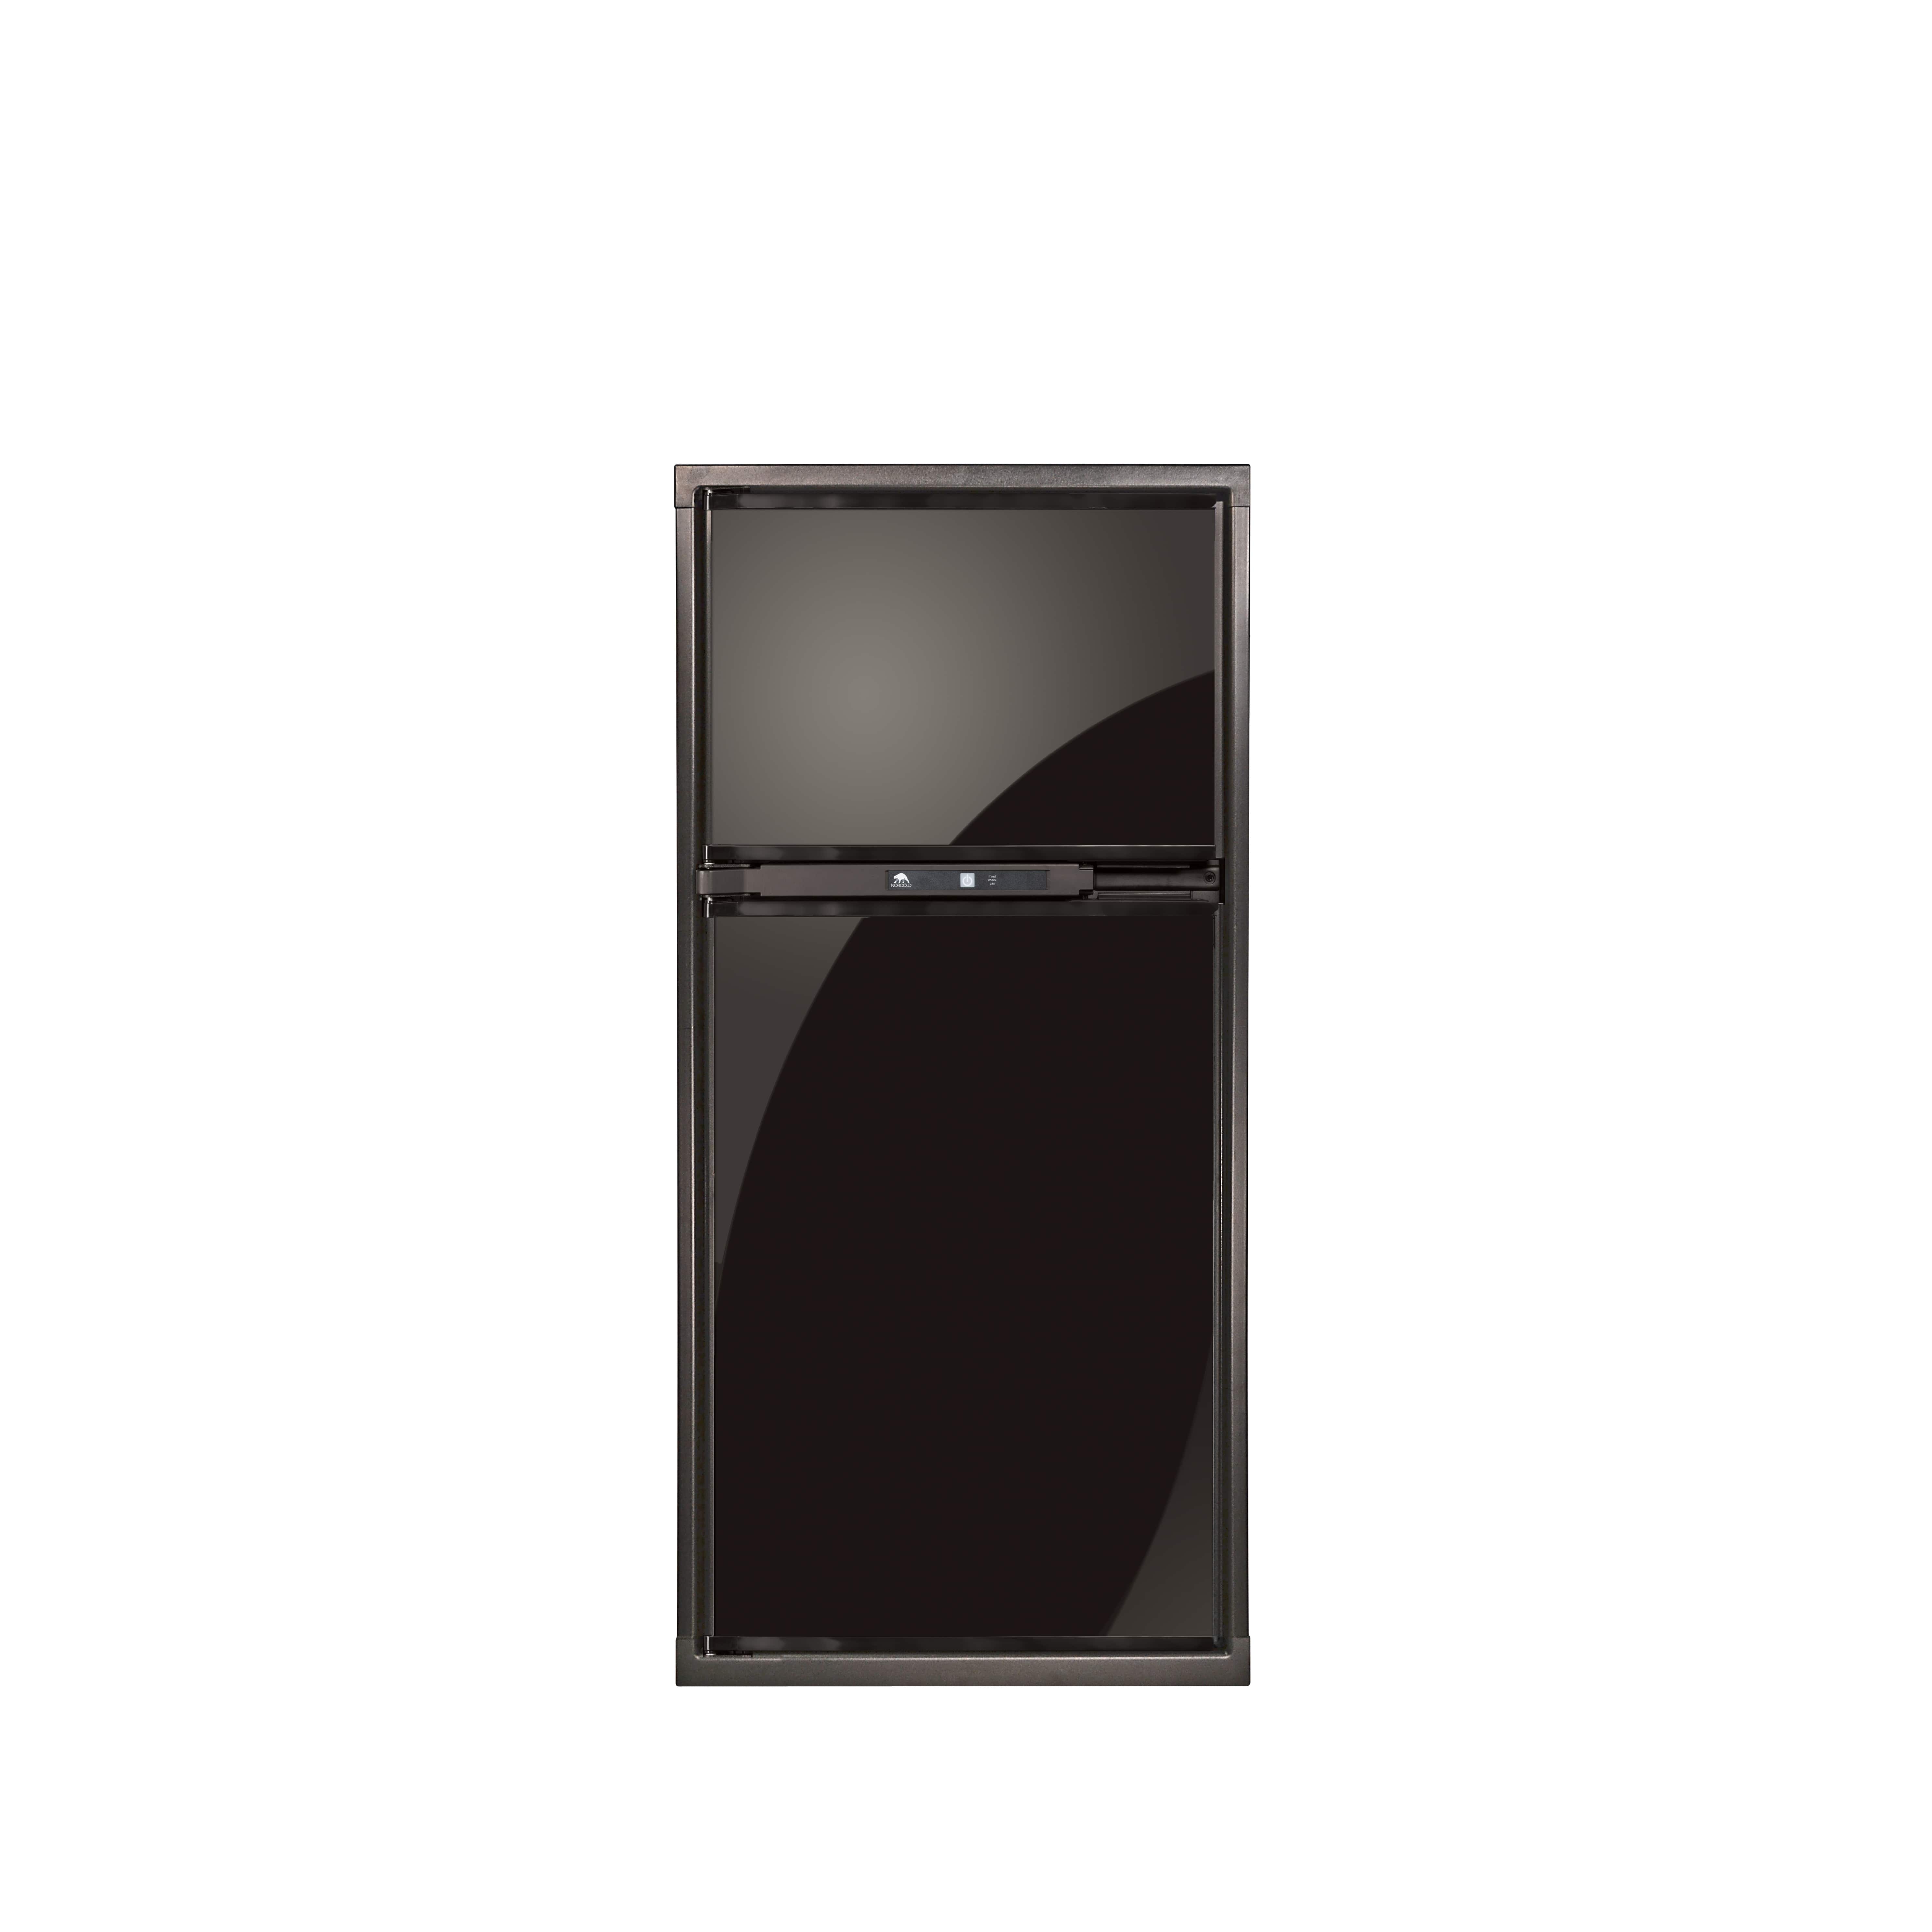 Norcold Polar N7XFL Refrigerator / Freezer